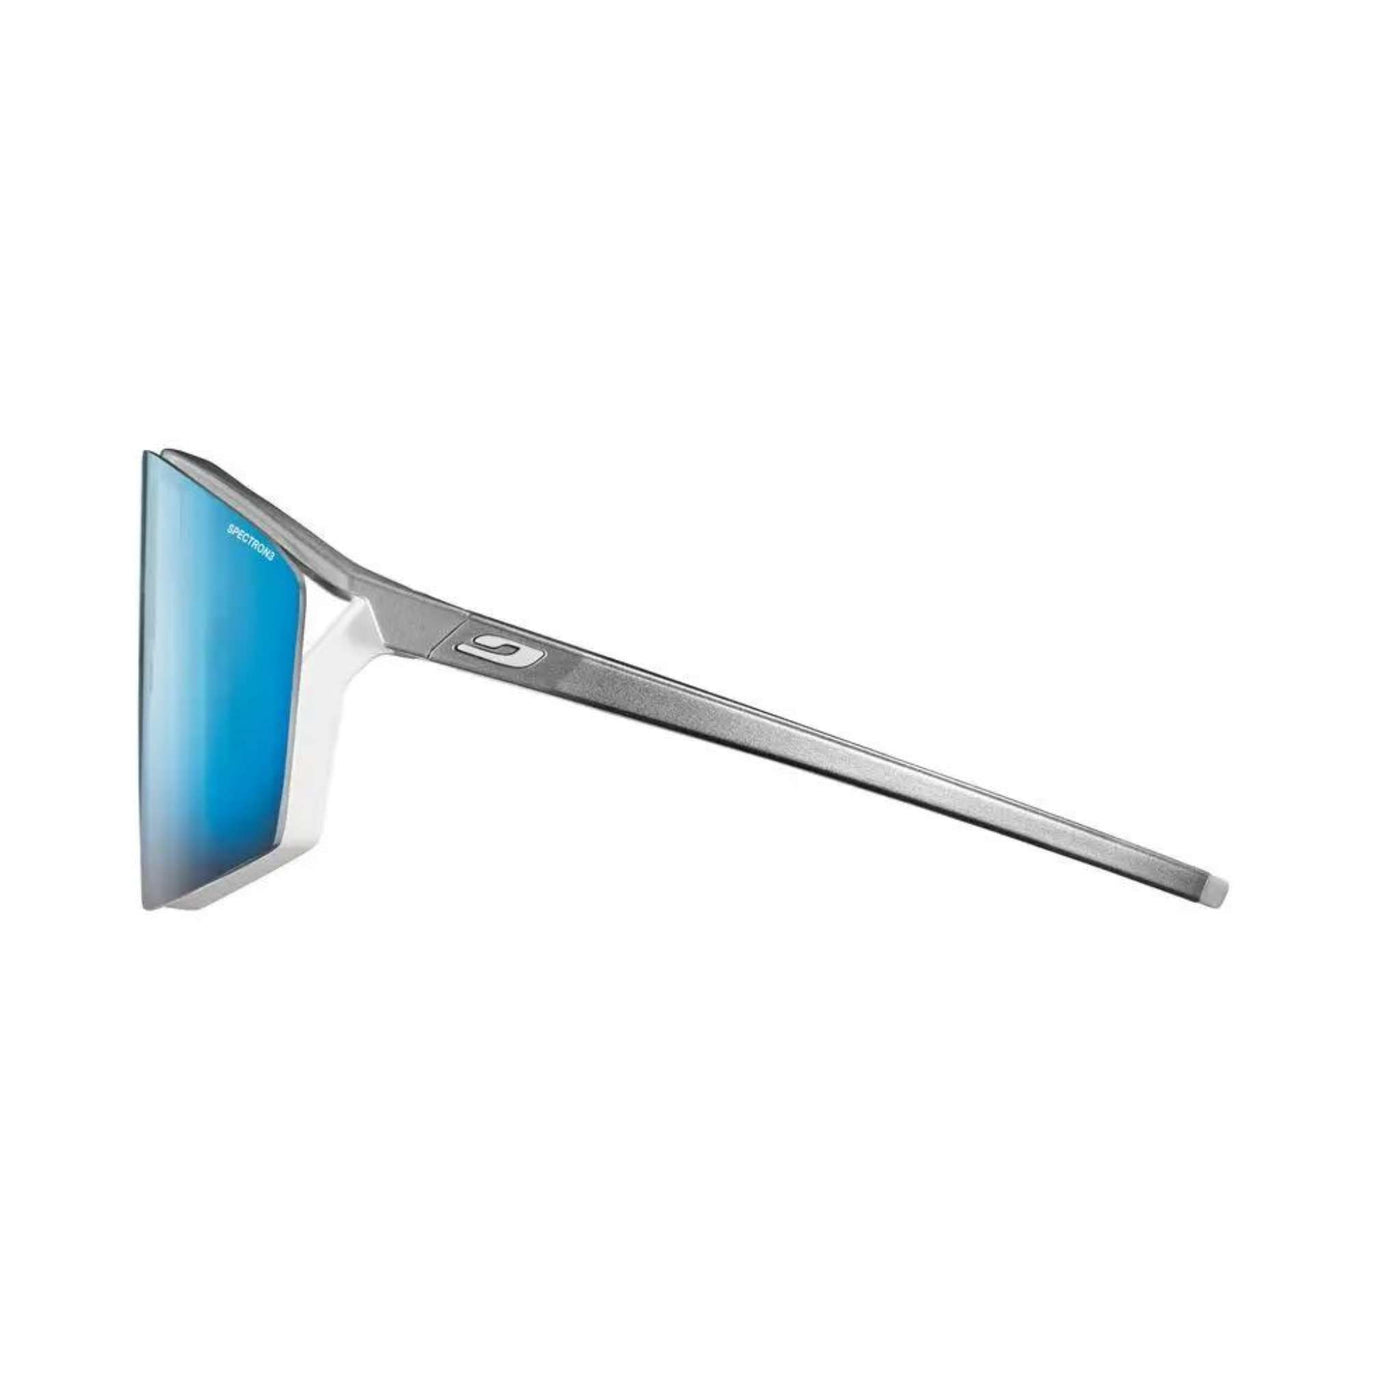 Julbo Edge Shiny Silver/Matt White Sunglasses - Spectron 3CF Lens | Performance Sunglasses | Further Faster Christchurch NZ